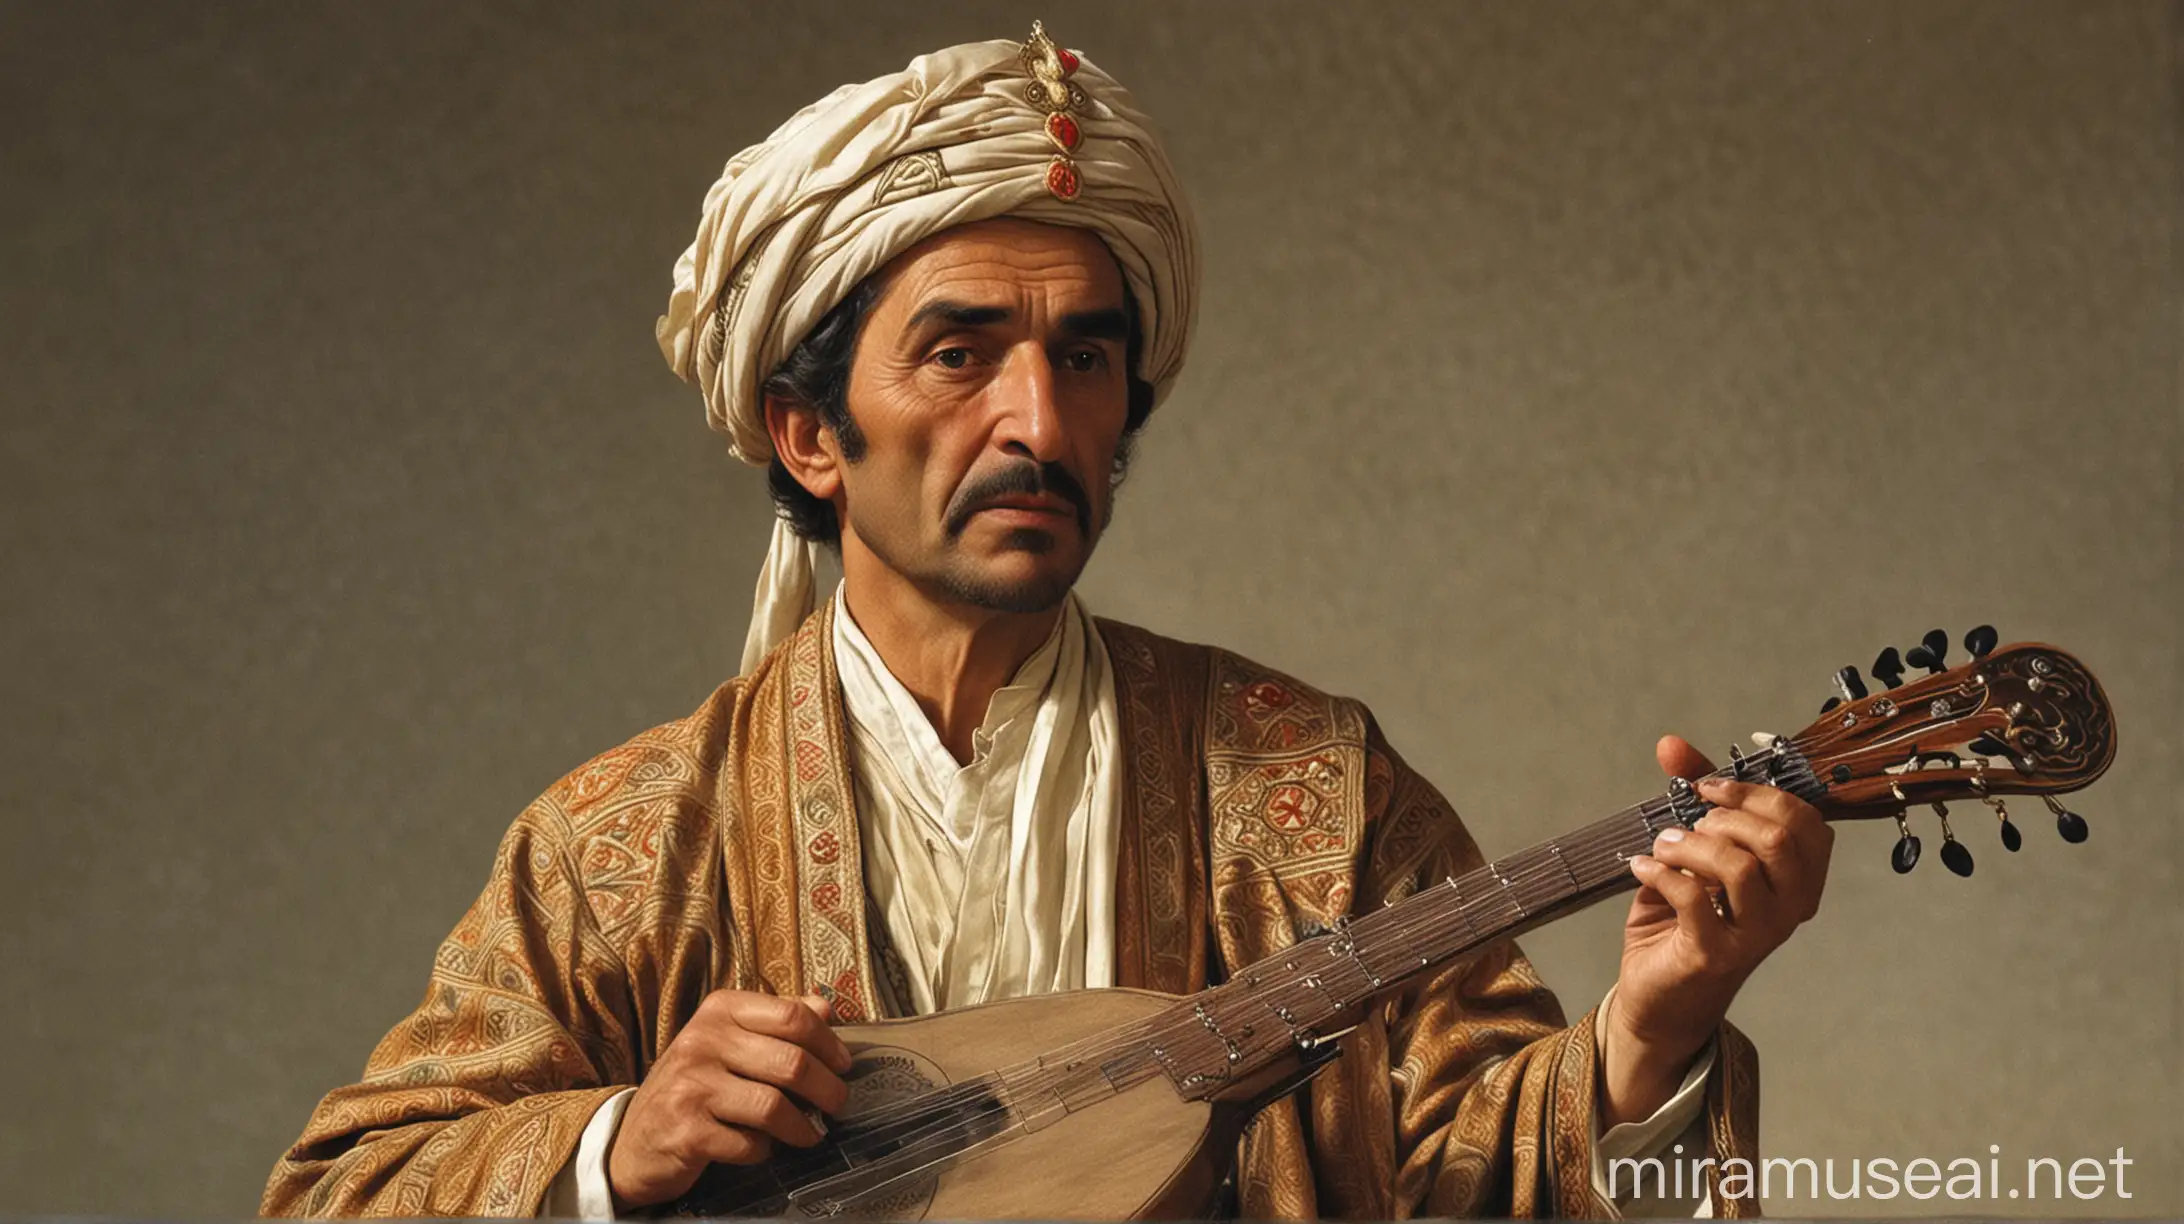 Karacaolan Legendary Turkmen Minstrel Poet of ukurovaToroslar Region